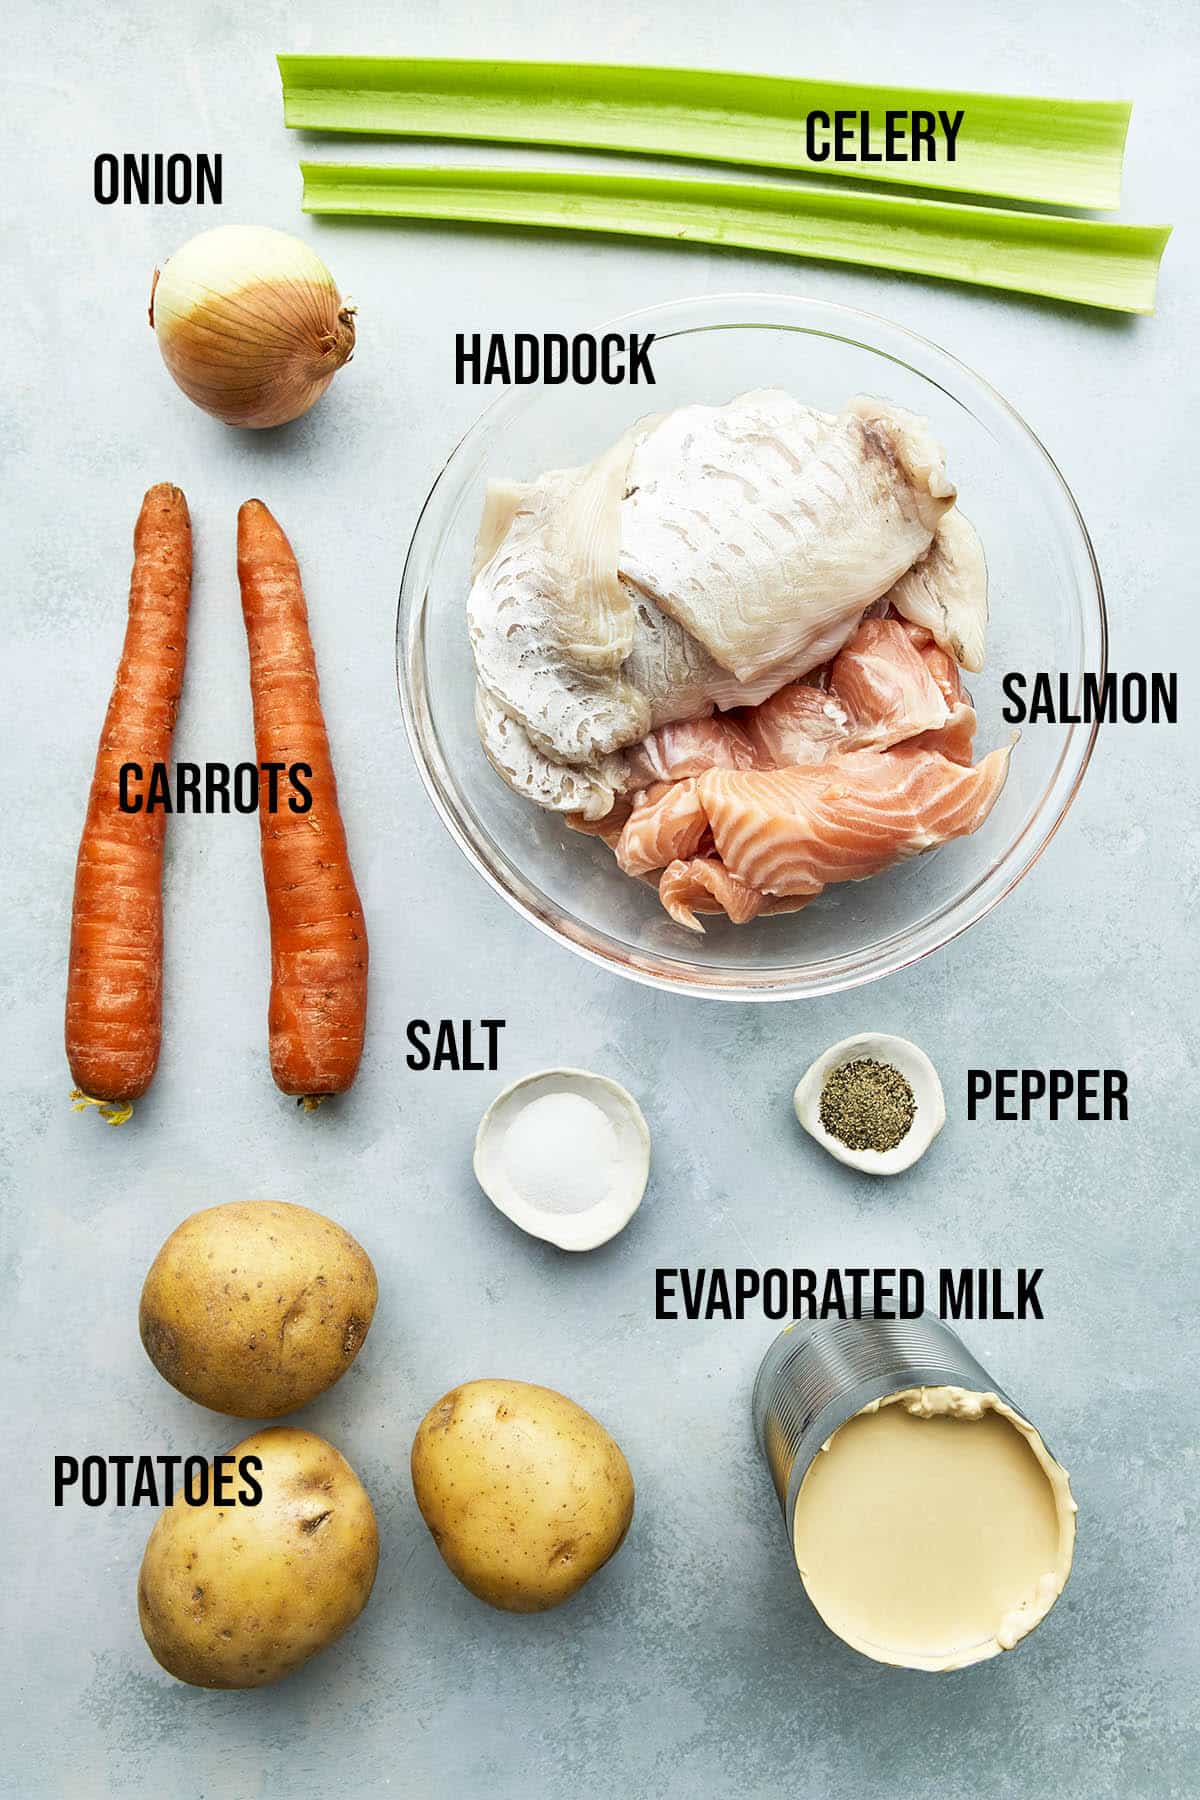 Ingredients to make East Coast fish chowder.